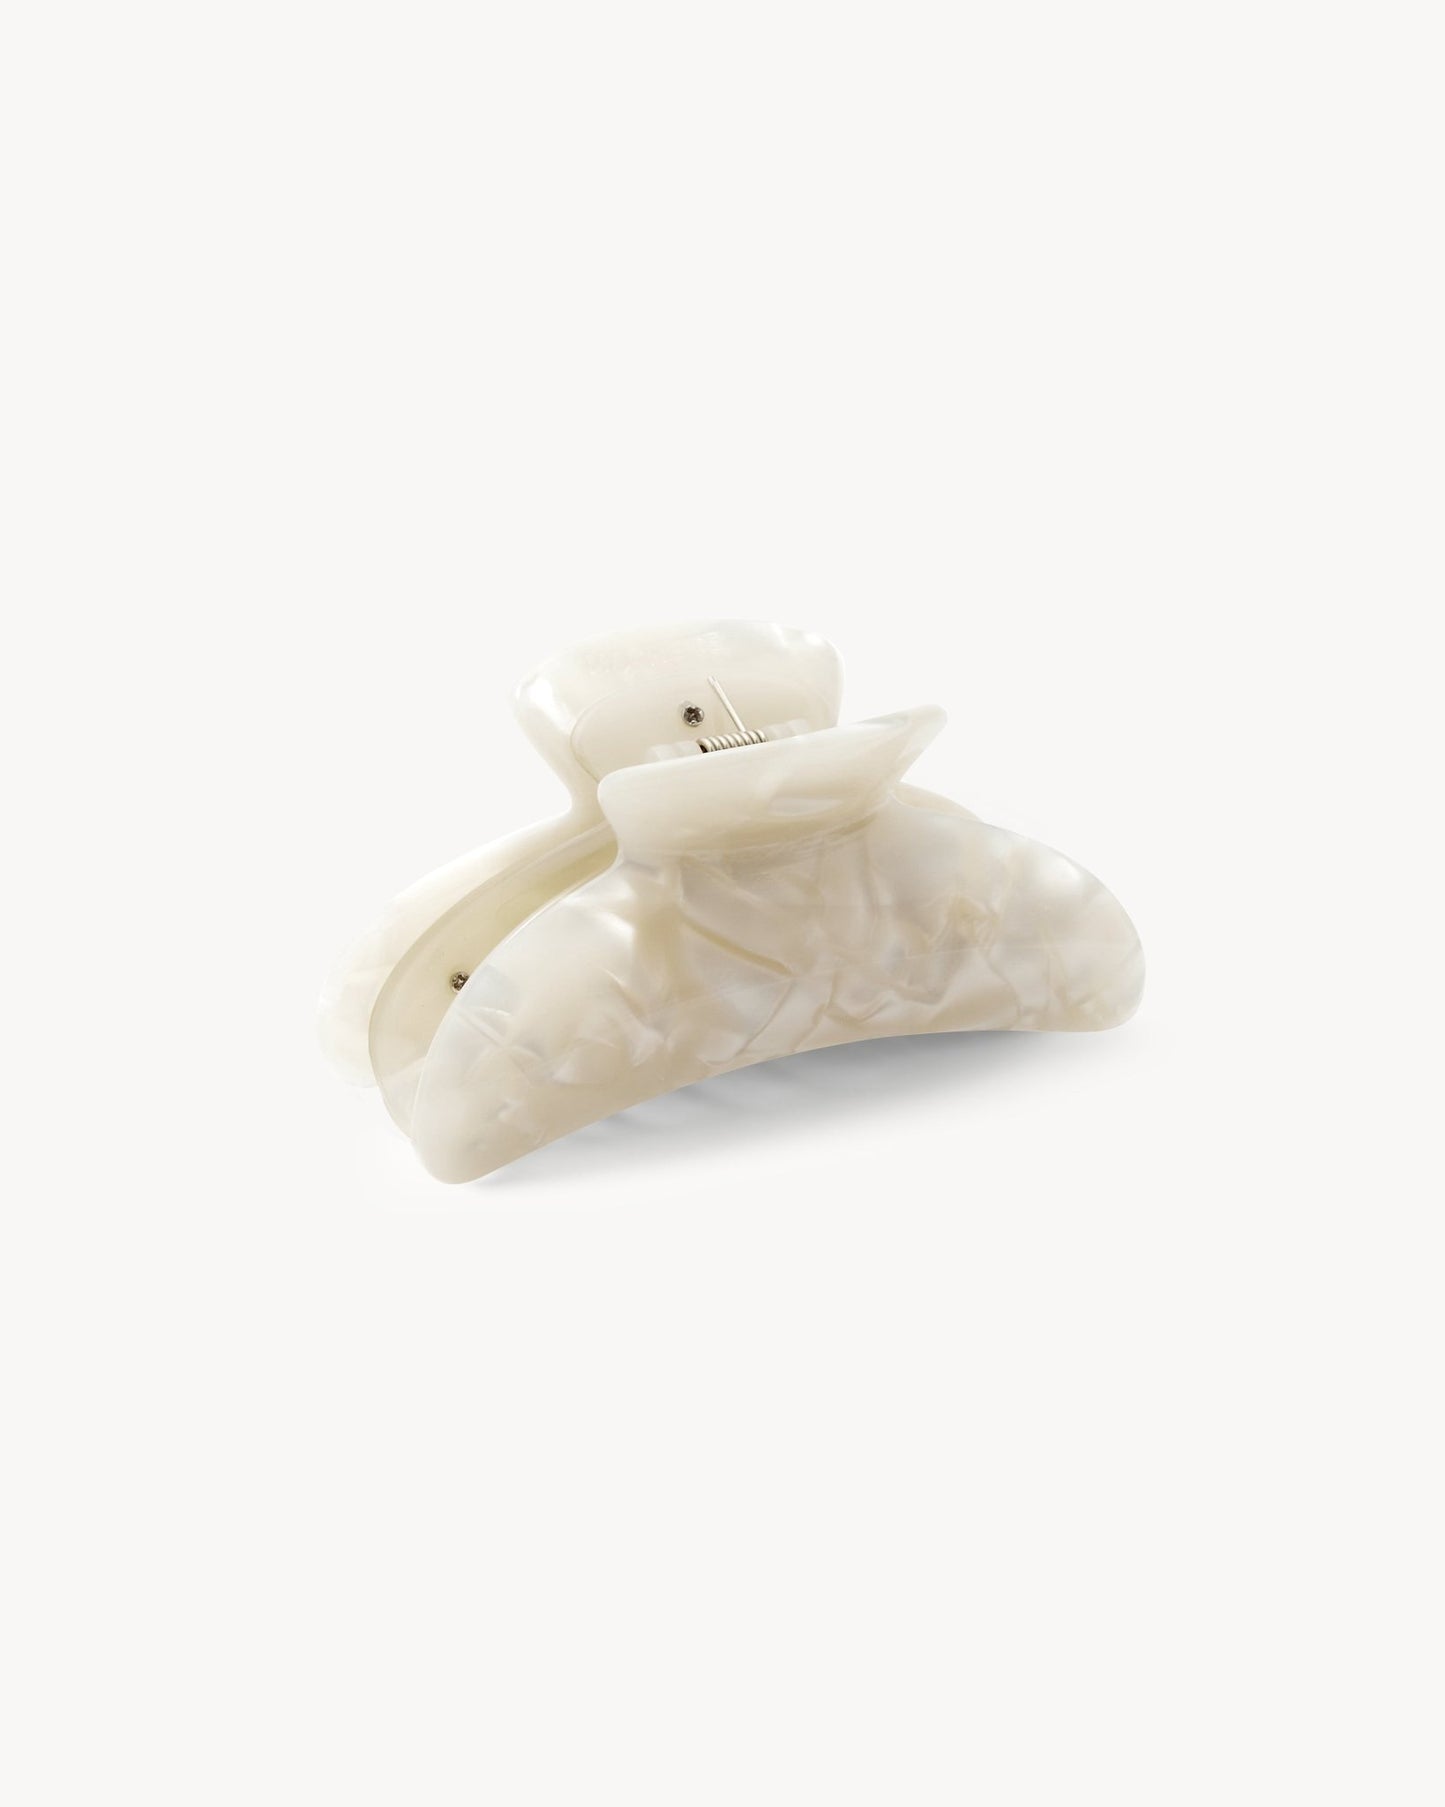 Grande Heirloom Claw in White Shell - MACHETE